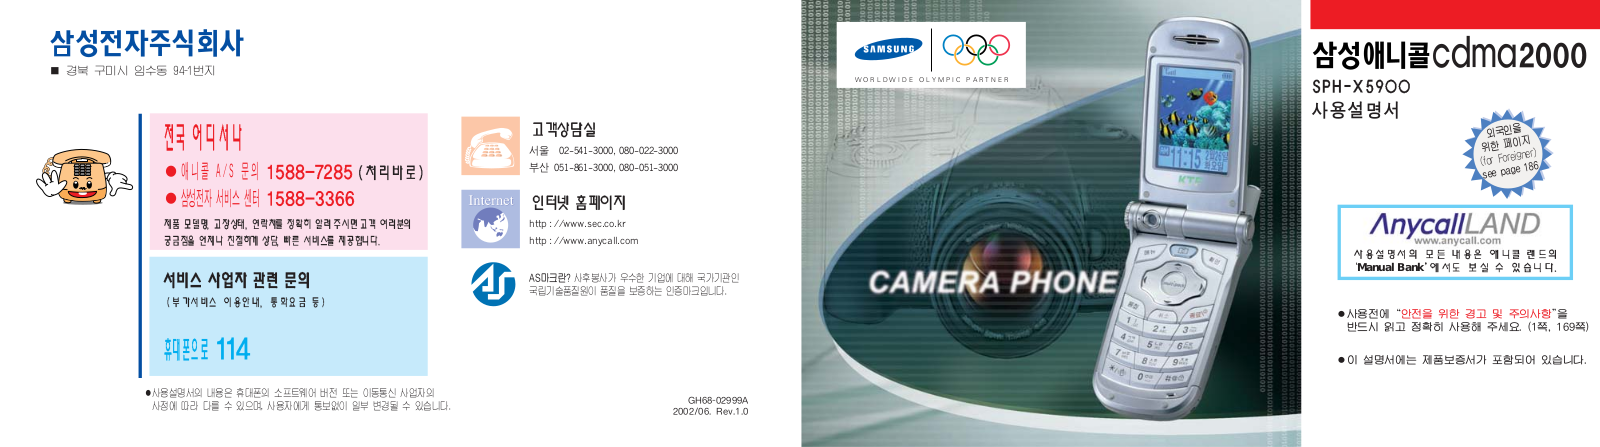 Samsung SPH-X5900 User Manual